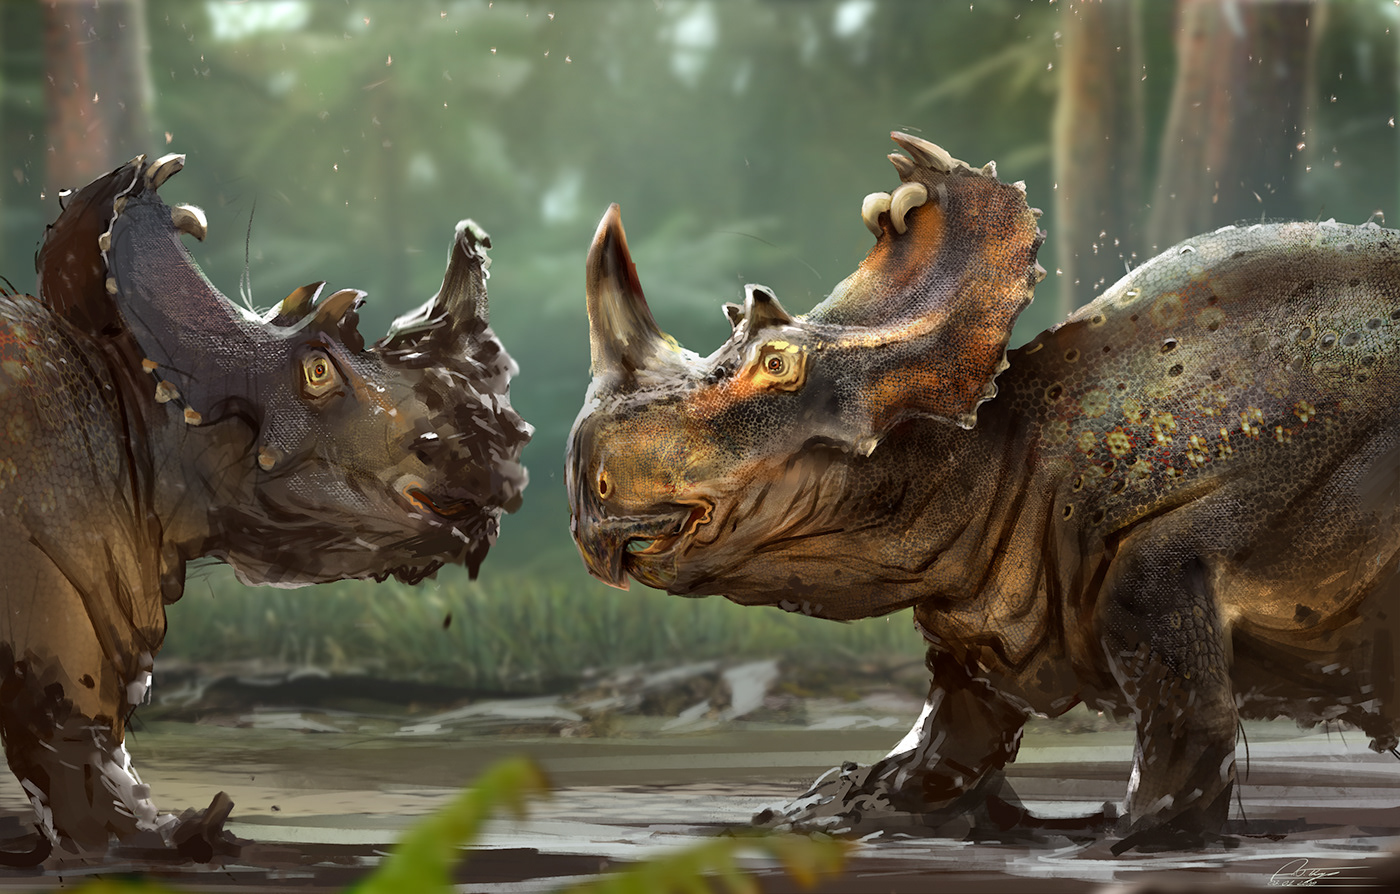 prehistoric digitalpainting ILLUSTRATION  paleoart dinosaurs Nature natural history animals painting   tyrannosaurus